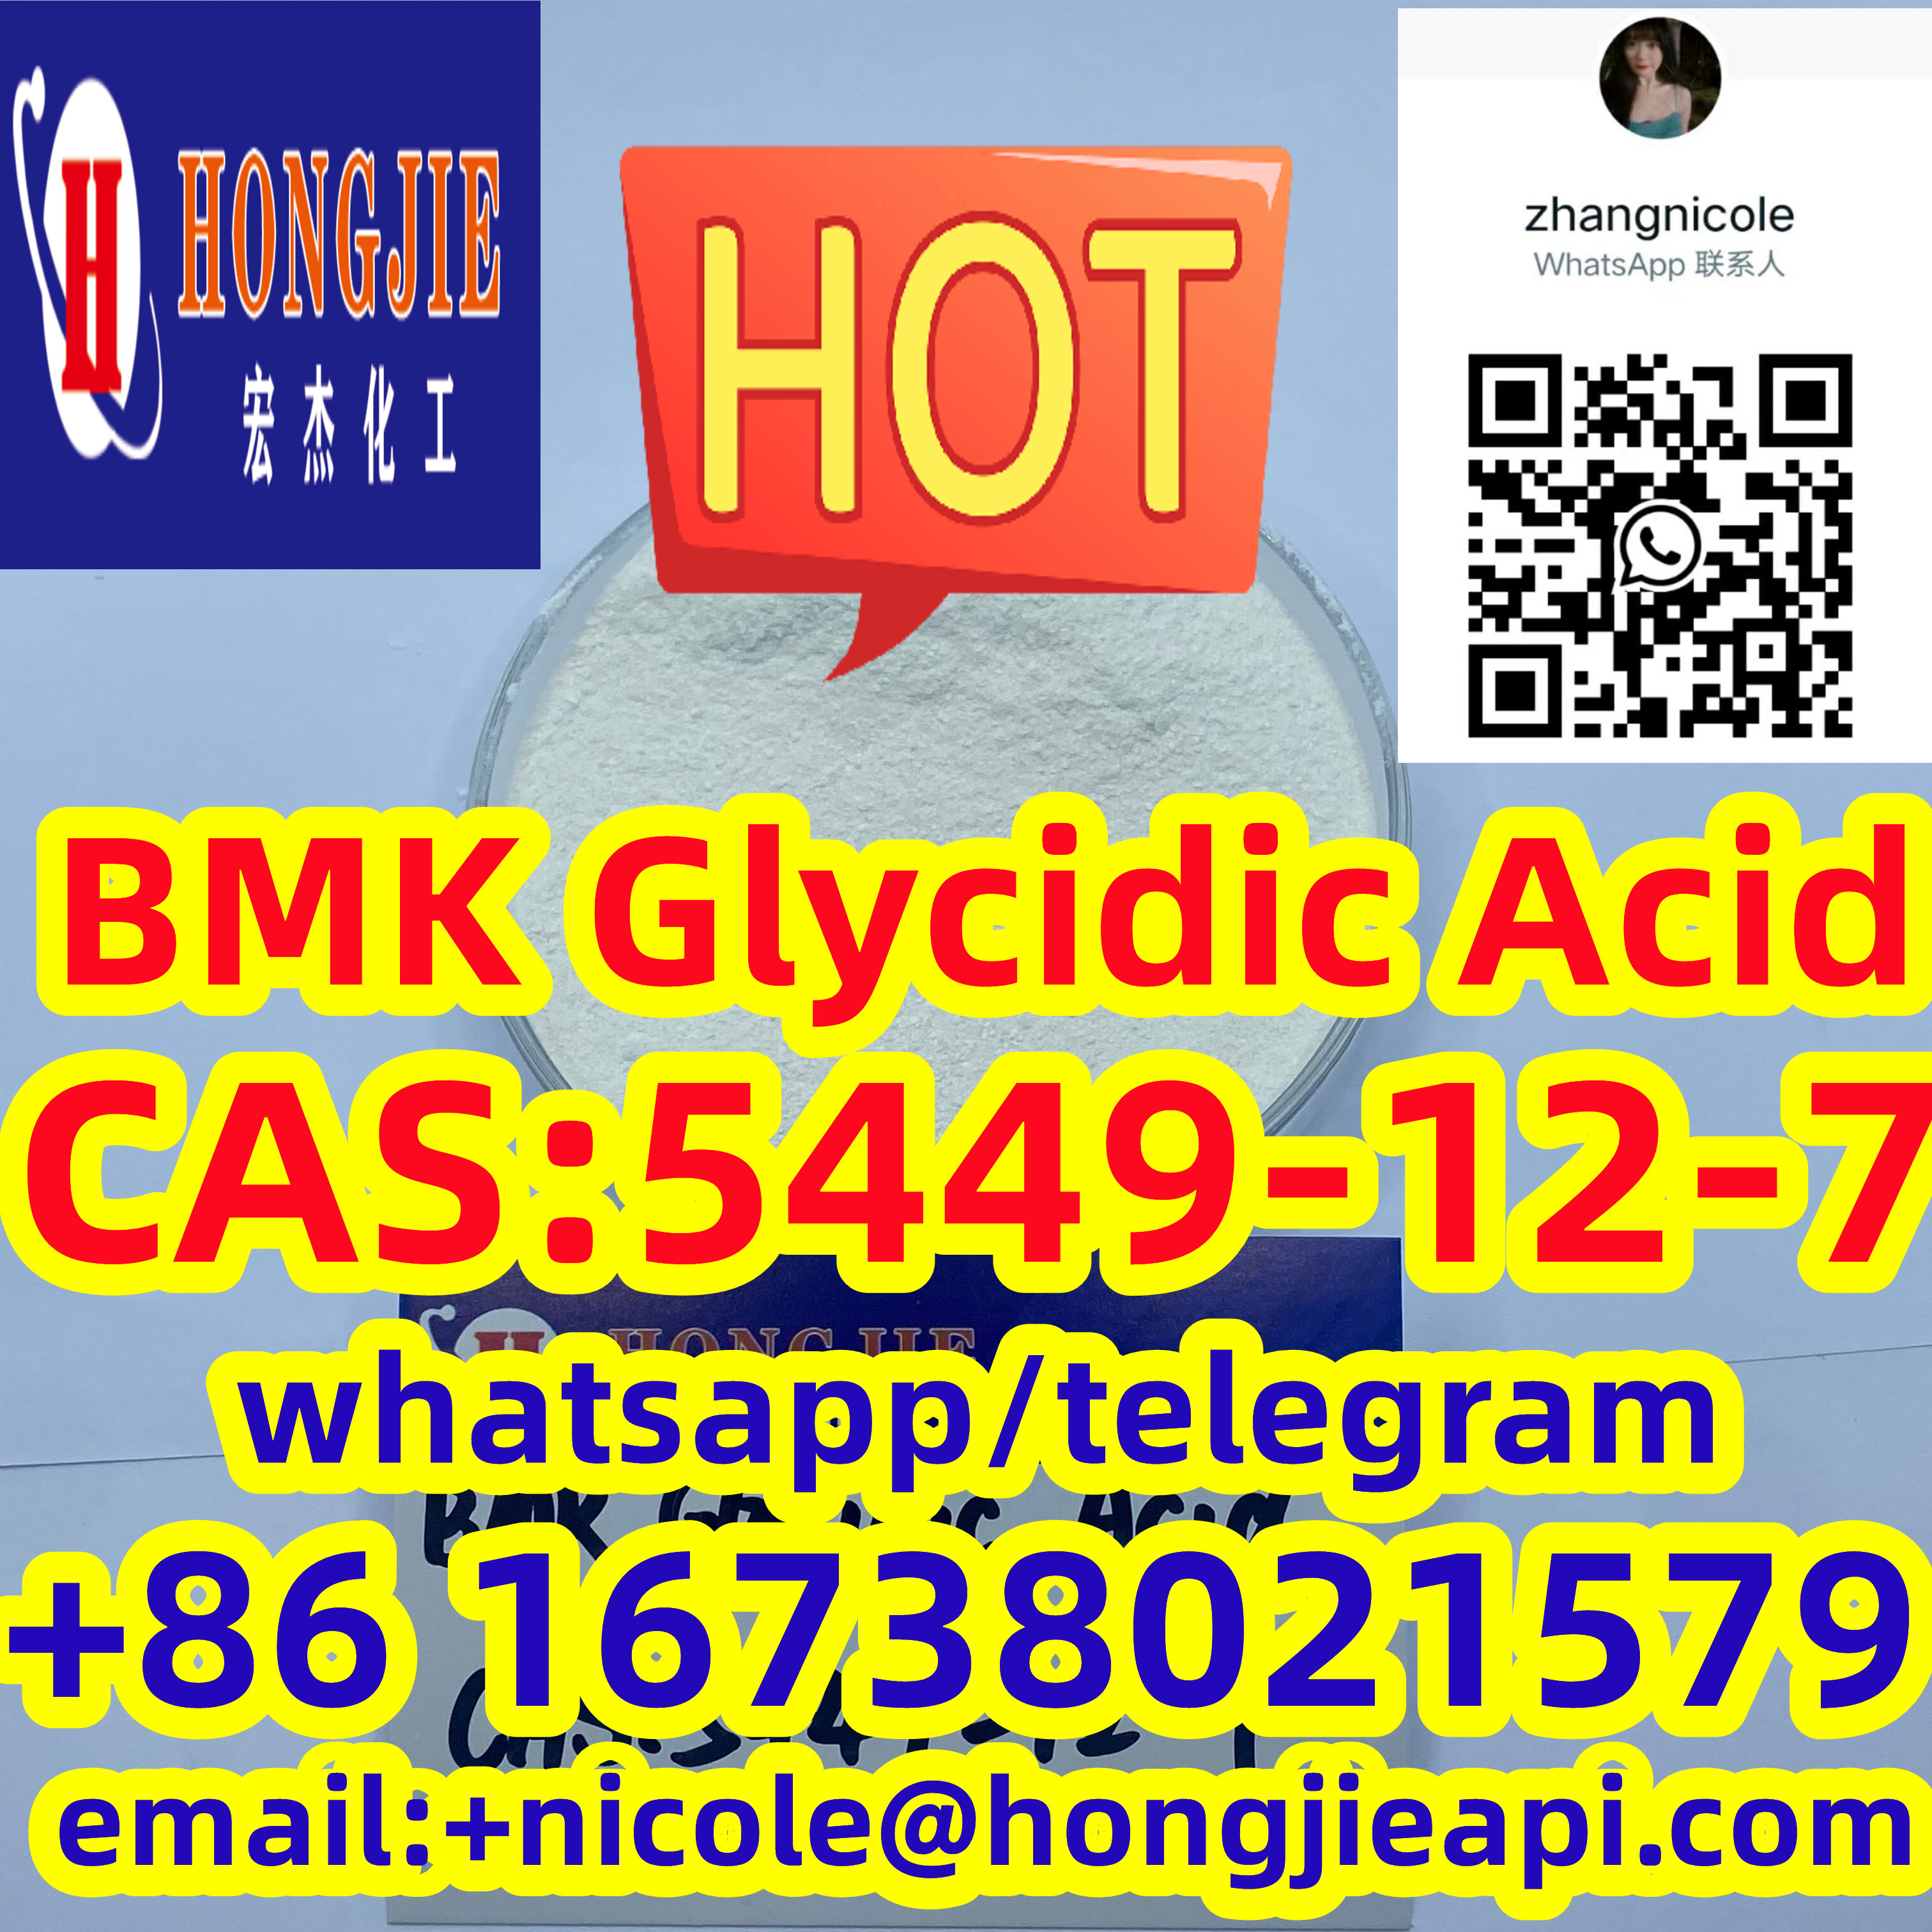 High quality 5449-12-7 BMK 2-methyl-3-phenyl-oxirane-2-carboxylic acid